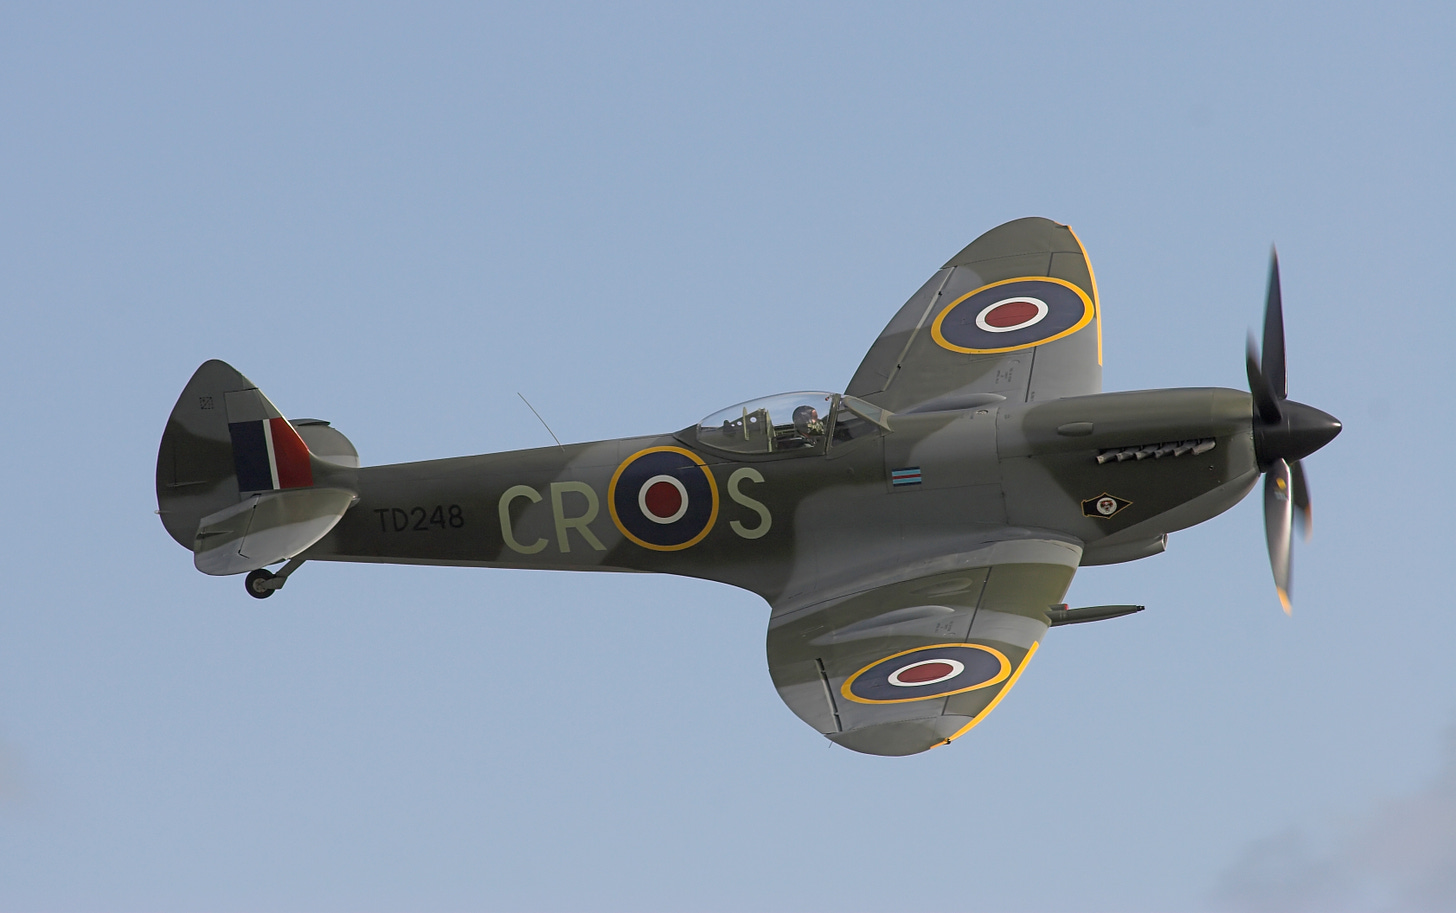 File:Supermarine Spitfire Mk XVI NR.jpg - Wikipedia